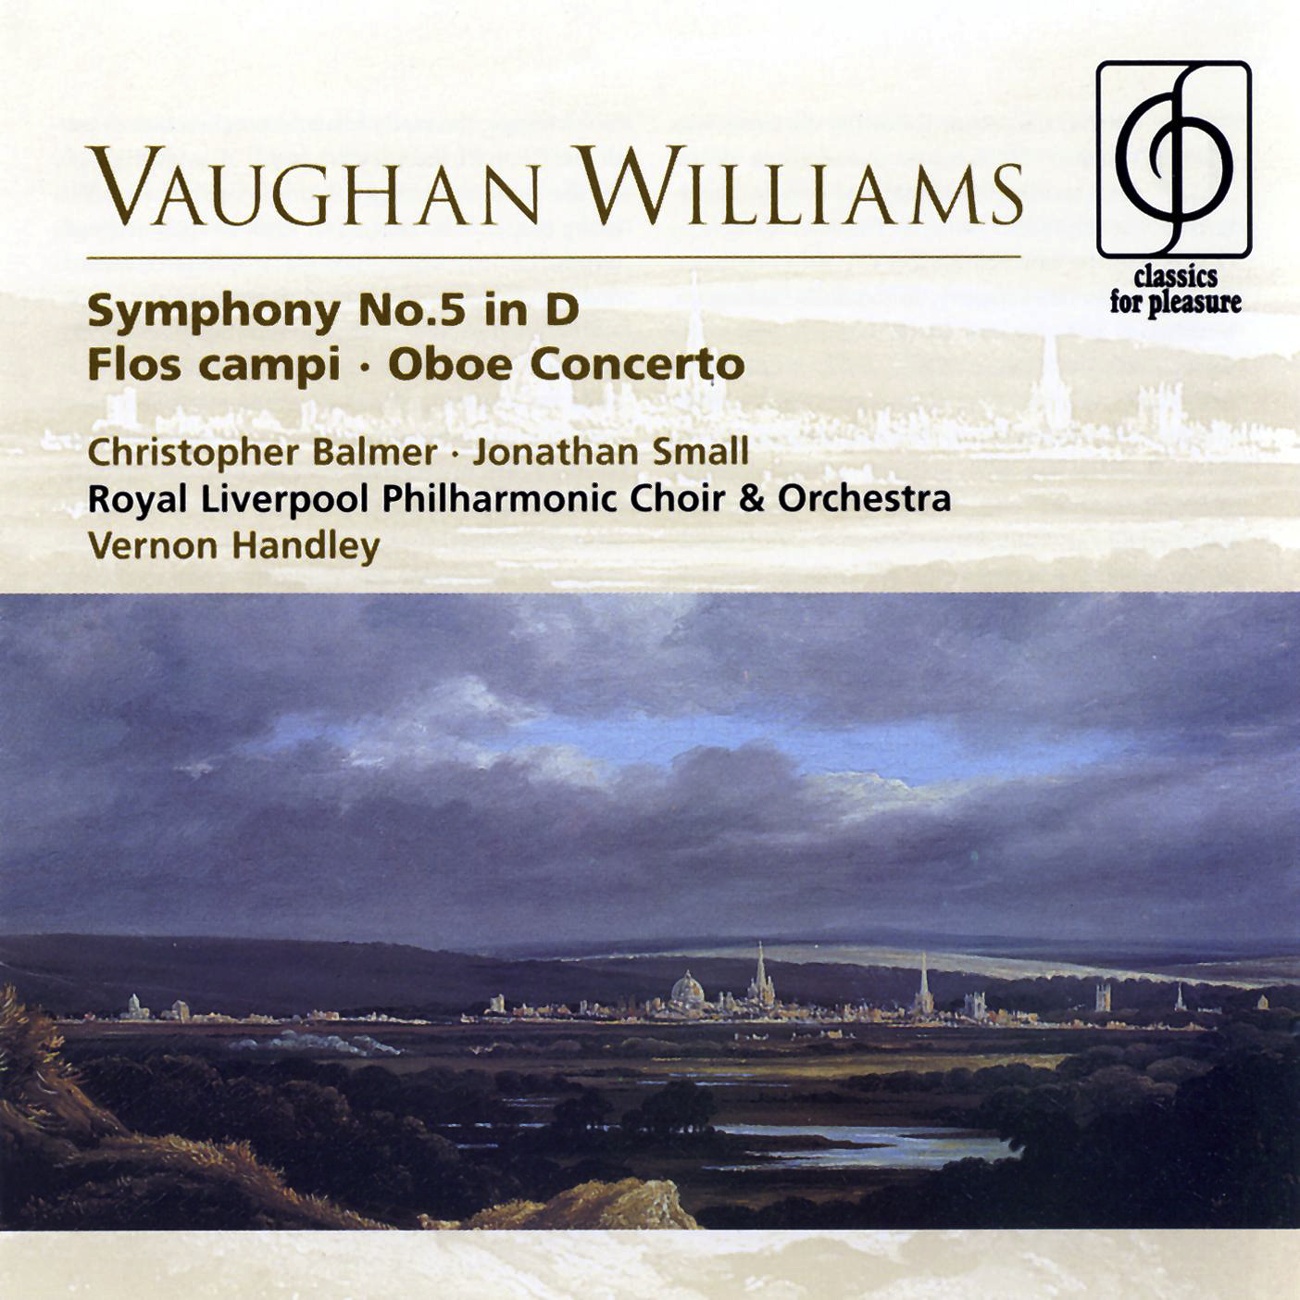 Vaughan Williams Symphony No.5 in D, Flos campi, Oboe Concerto